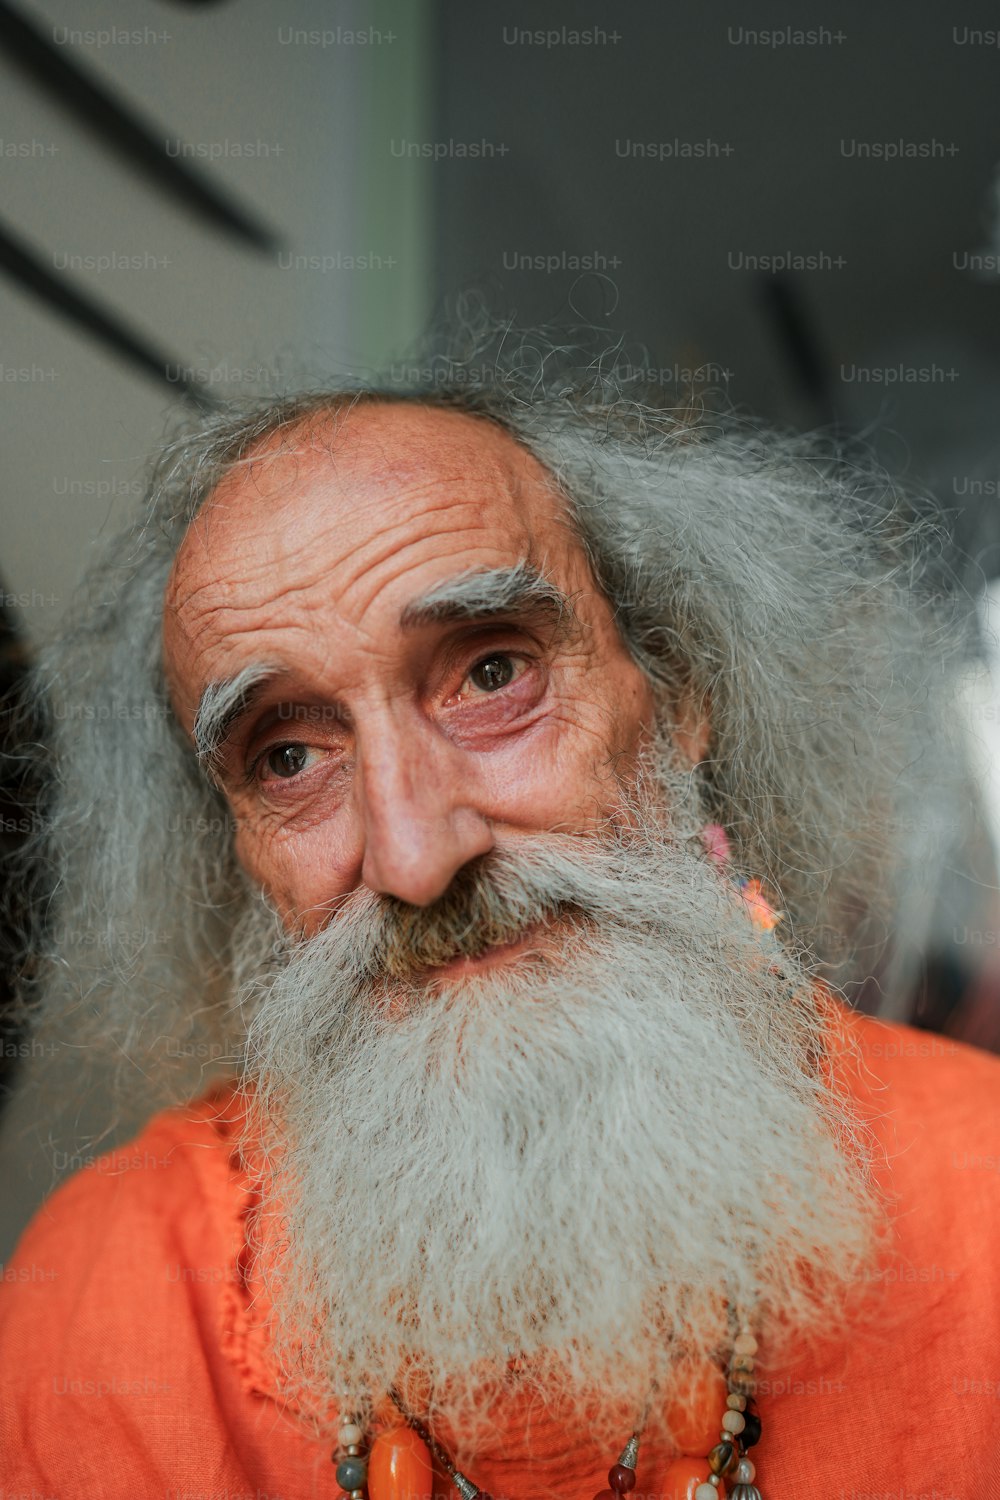 um velho de barba comprida e camisa laranja